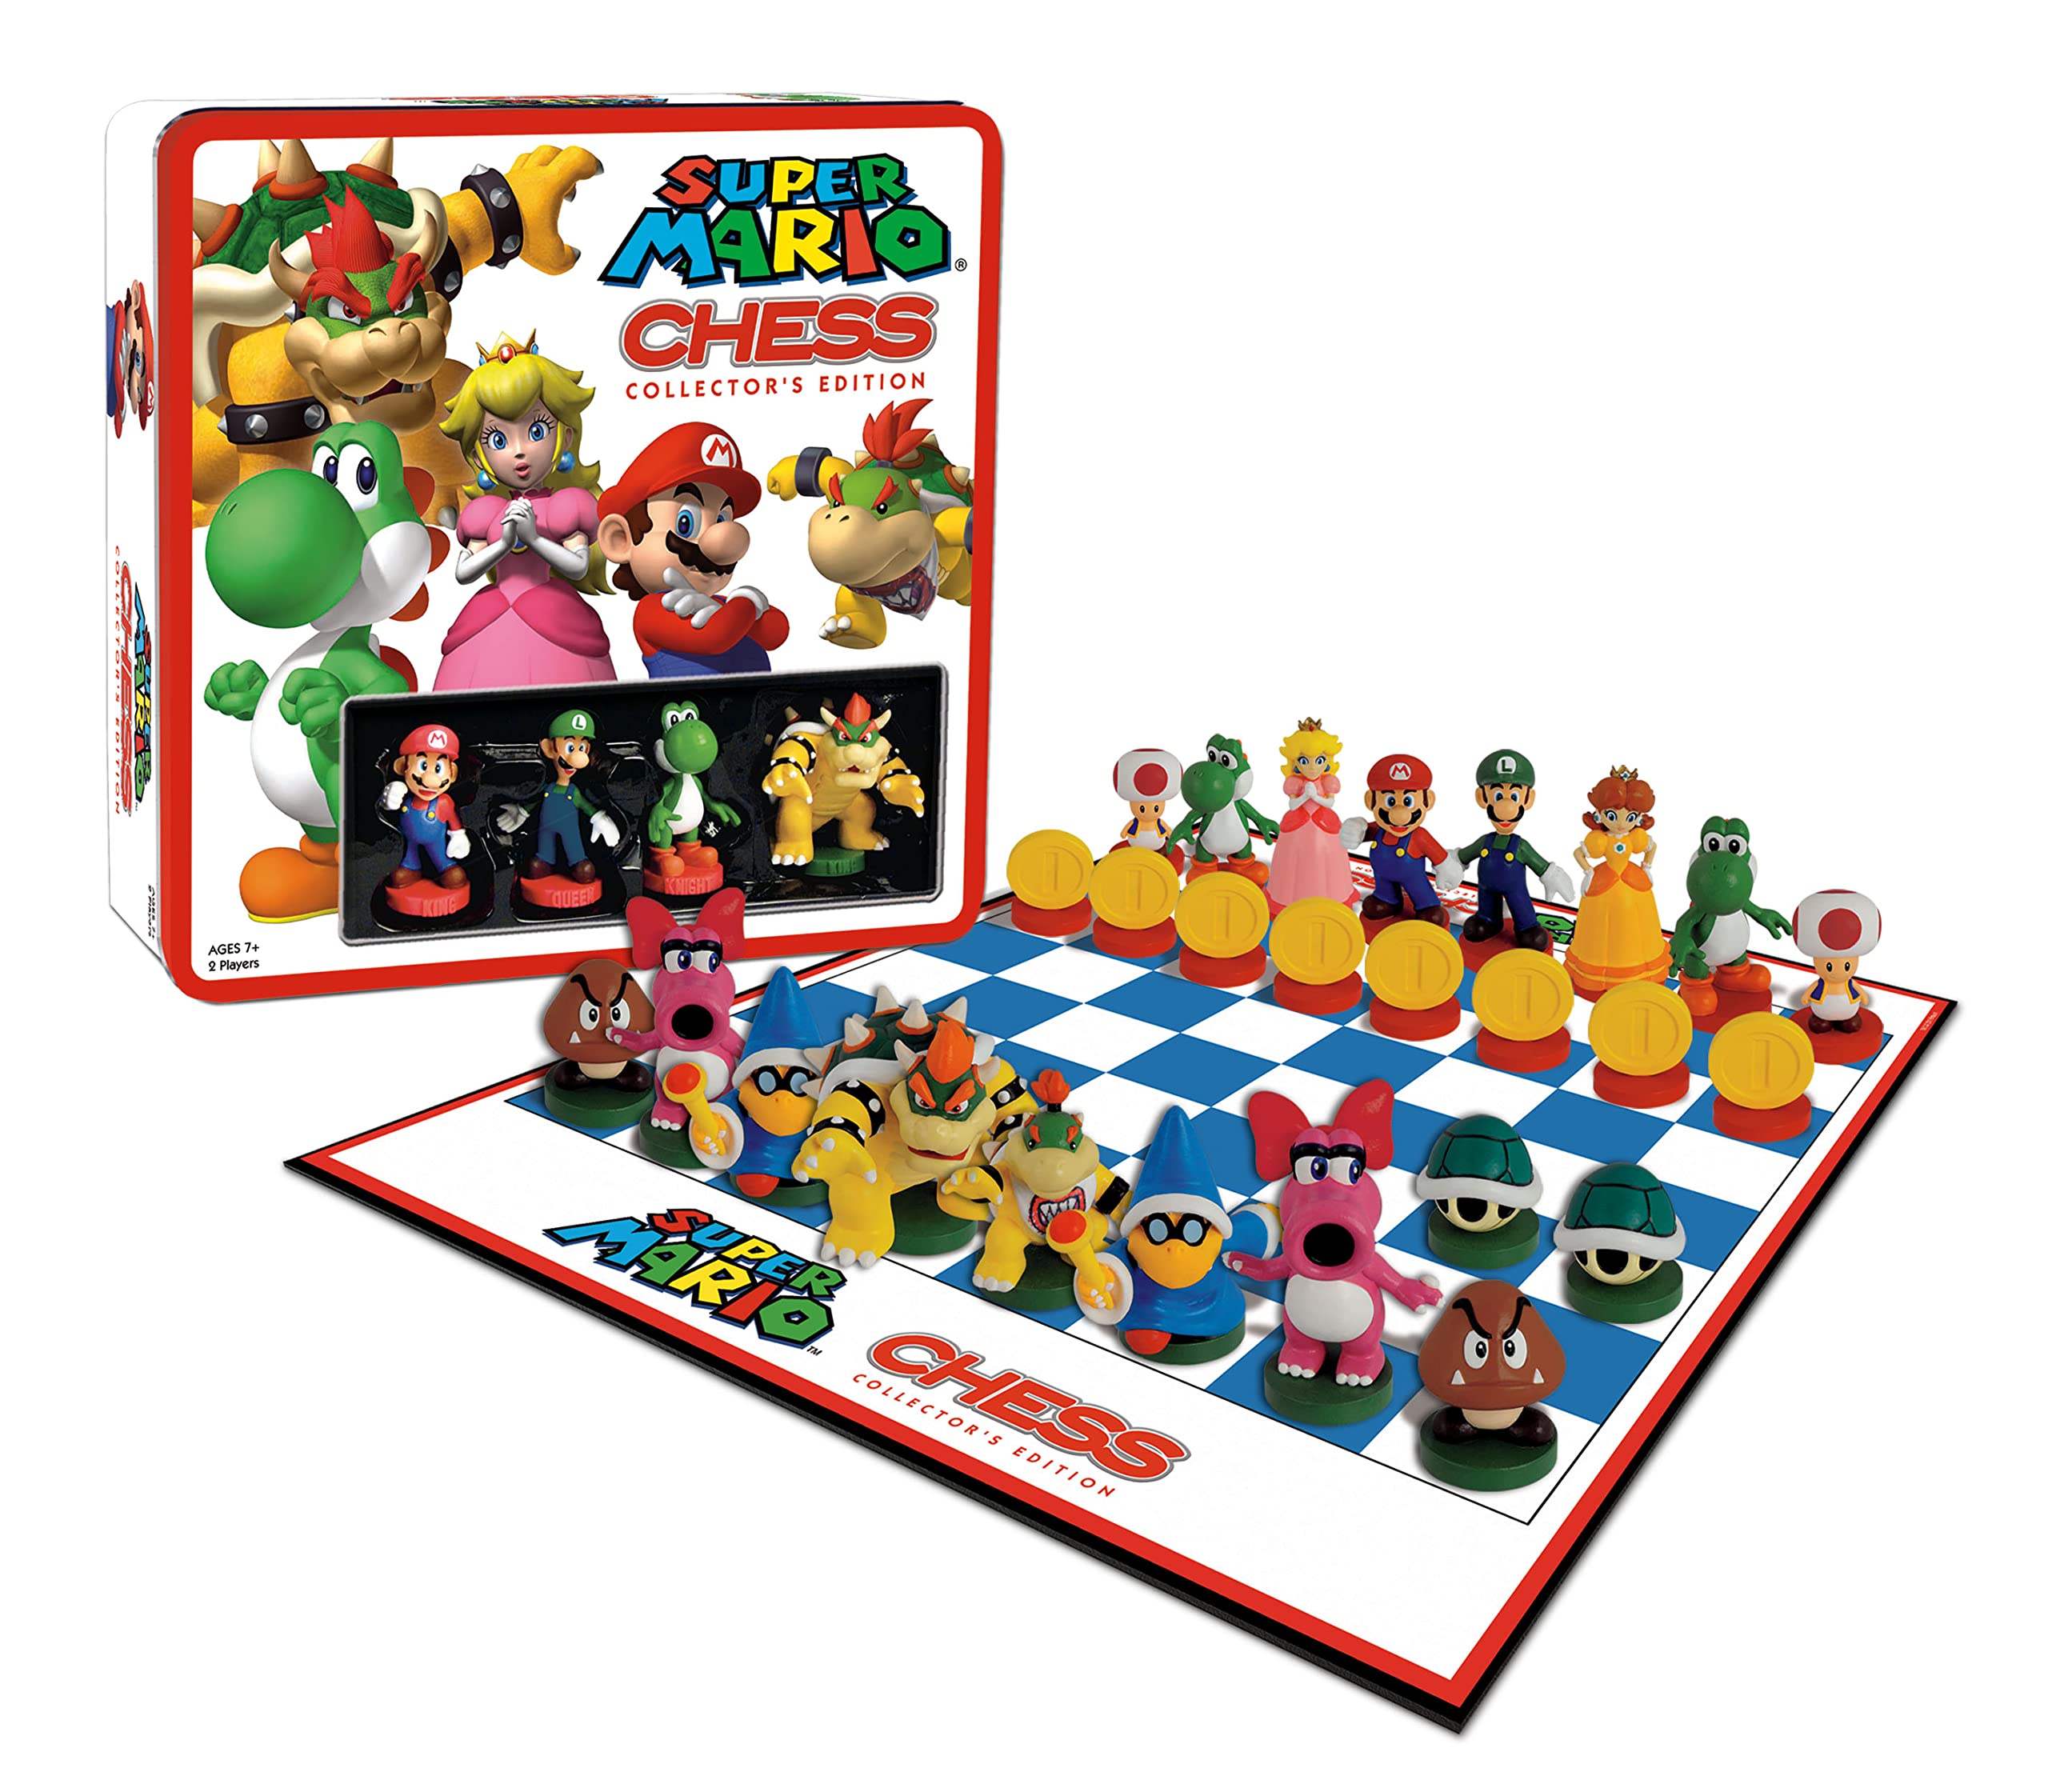 Chess - Super Mario Chess Collector's Edition (C3)